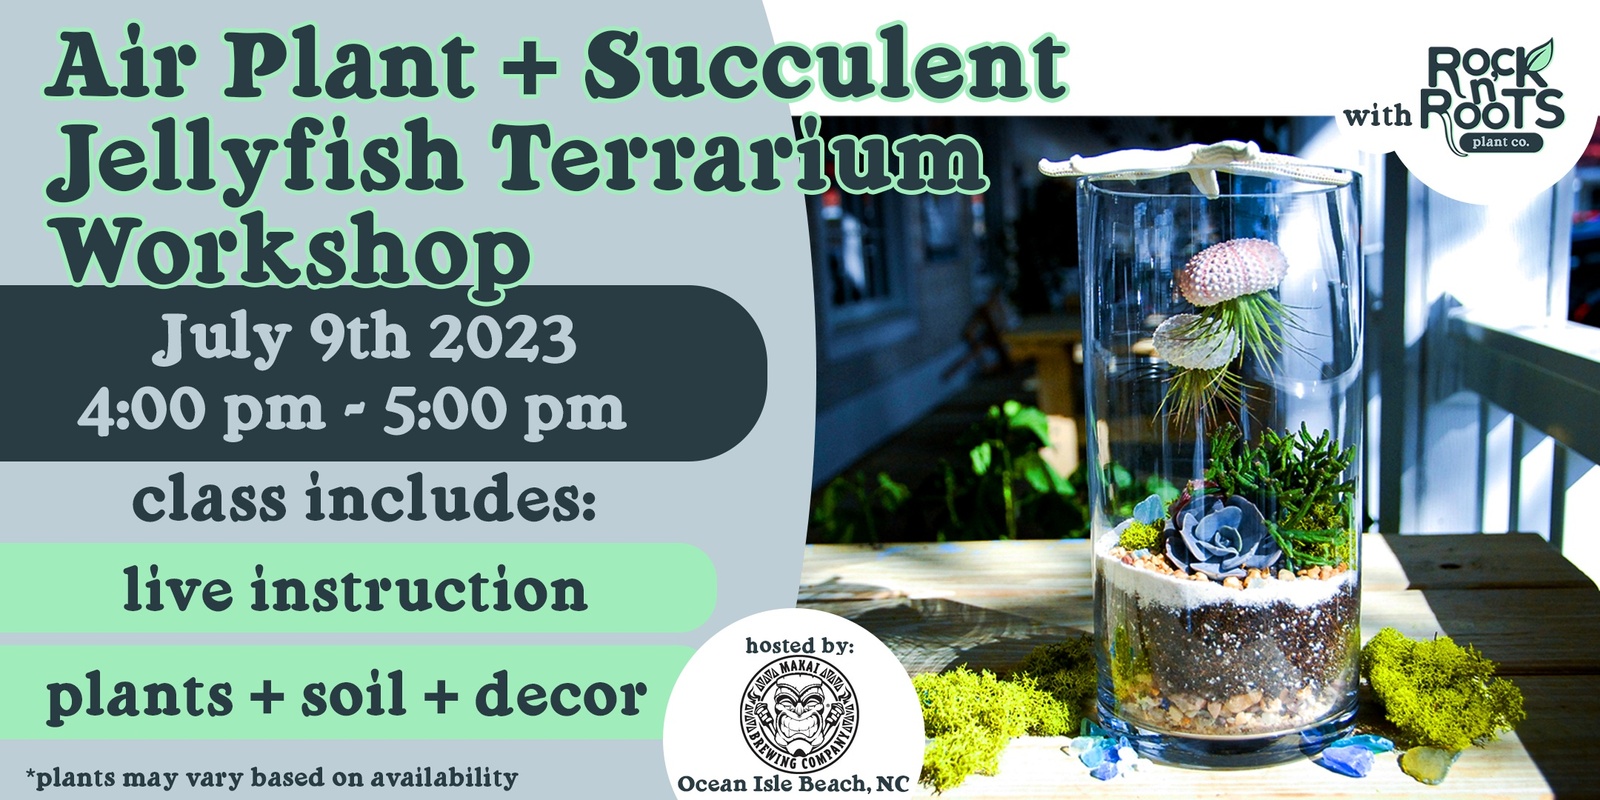 Banner image for Air Plant + Succulent Jellyfish Terrarium Workshop at Makai Brewing (Ocean Isle Beach, NC)